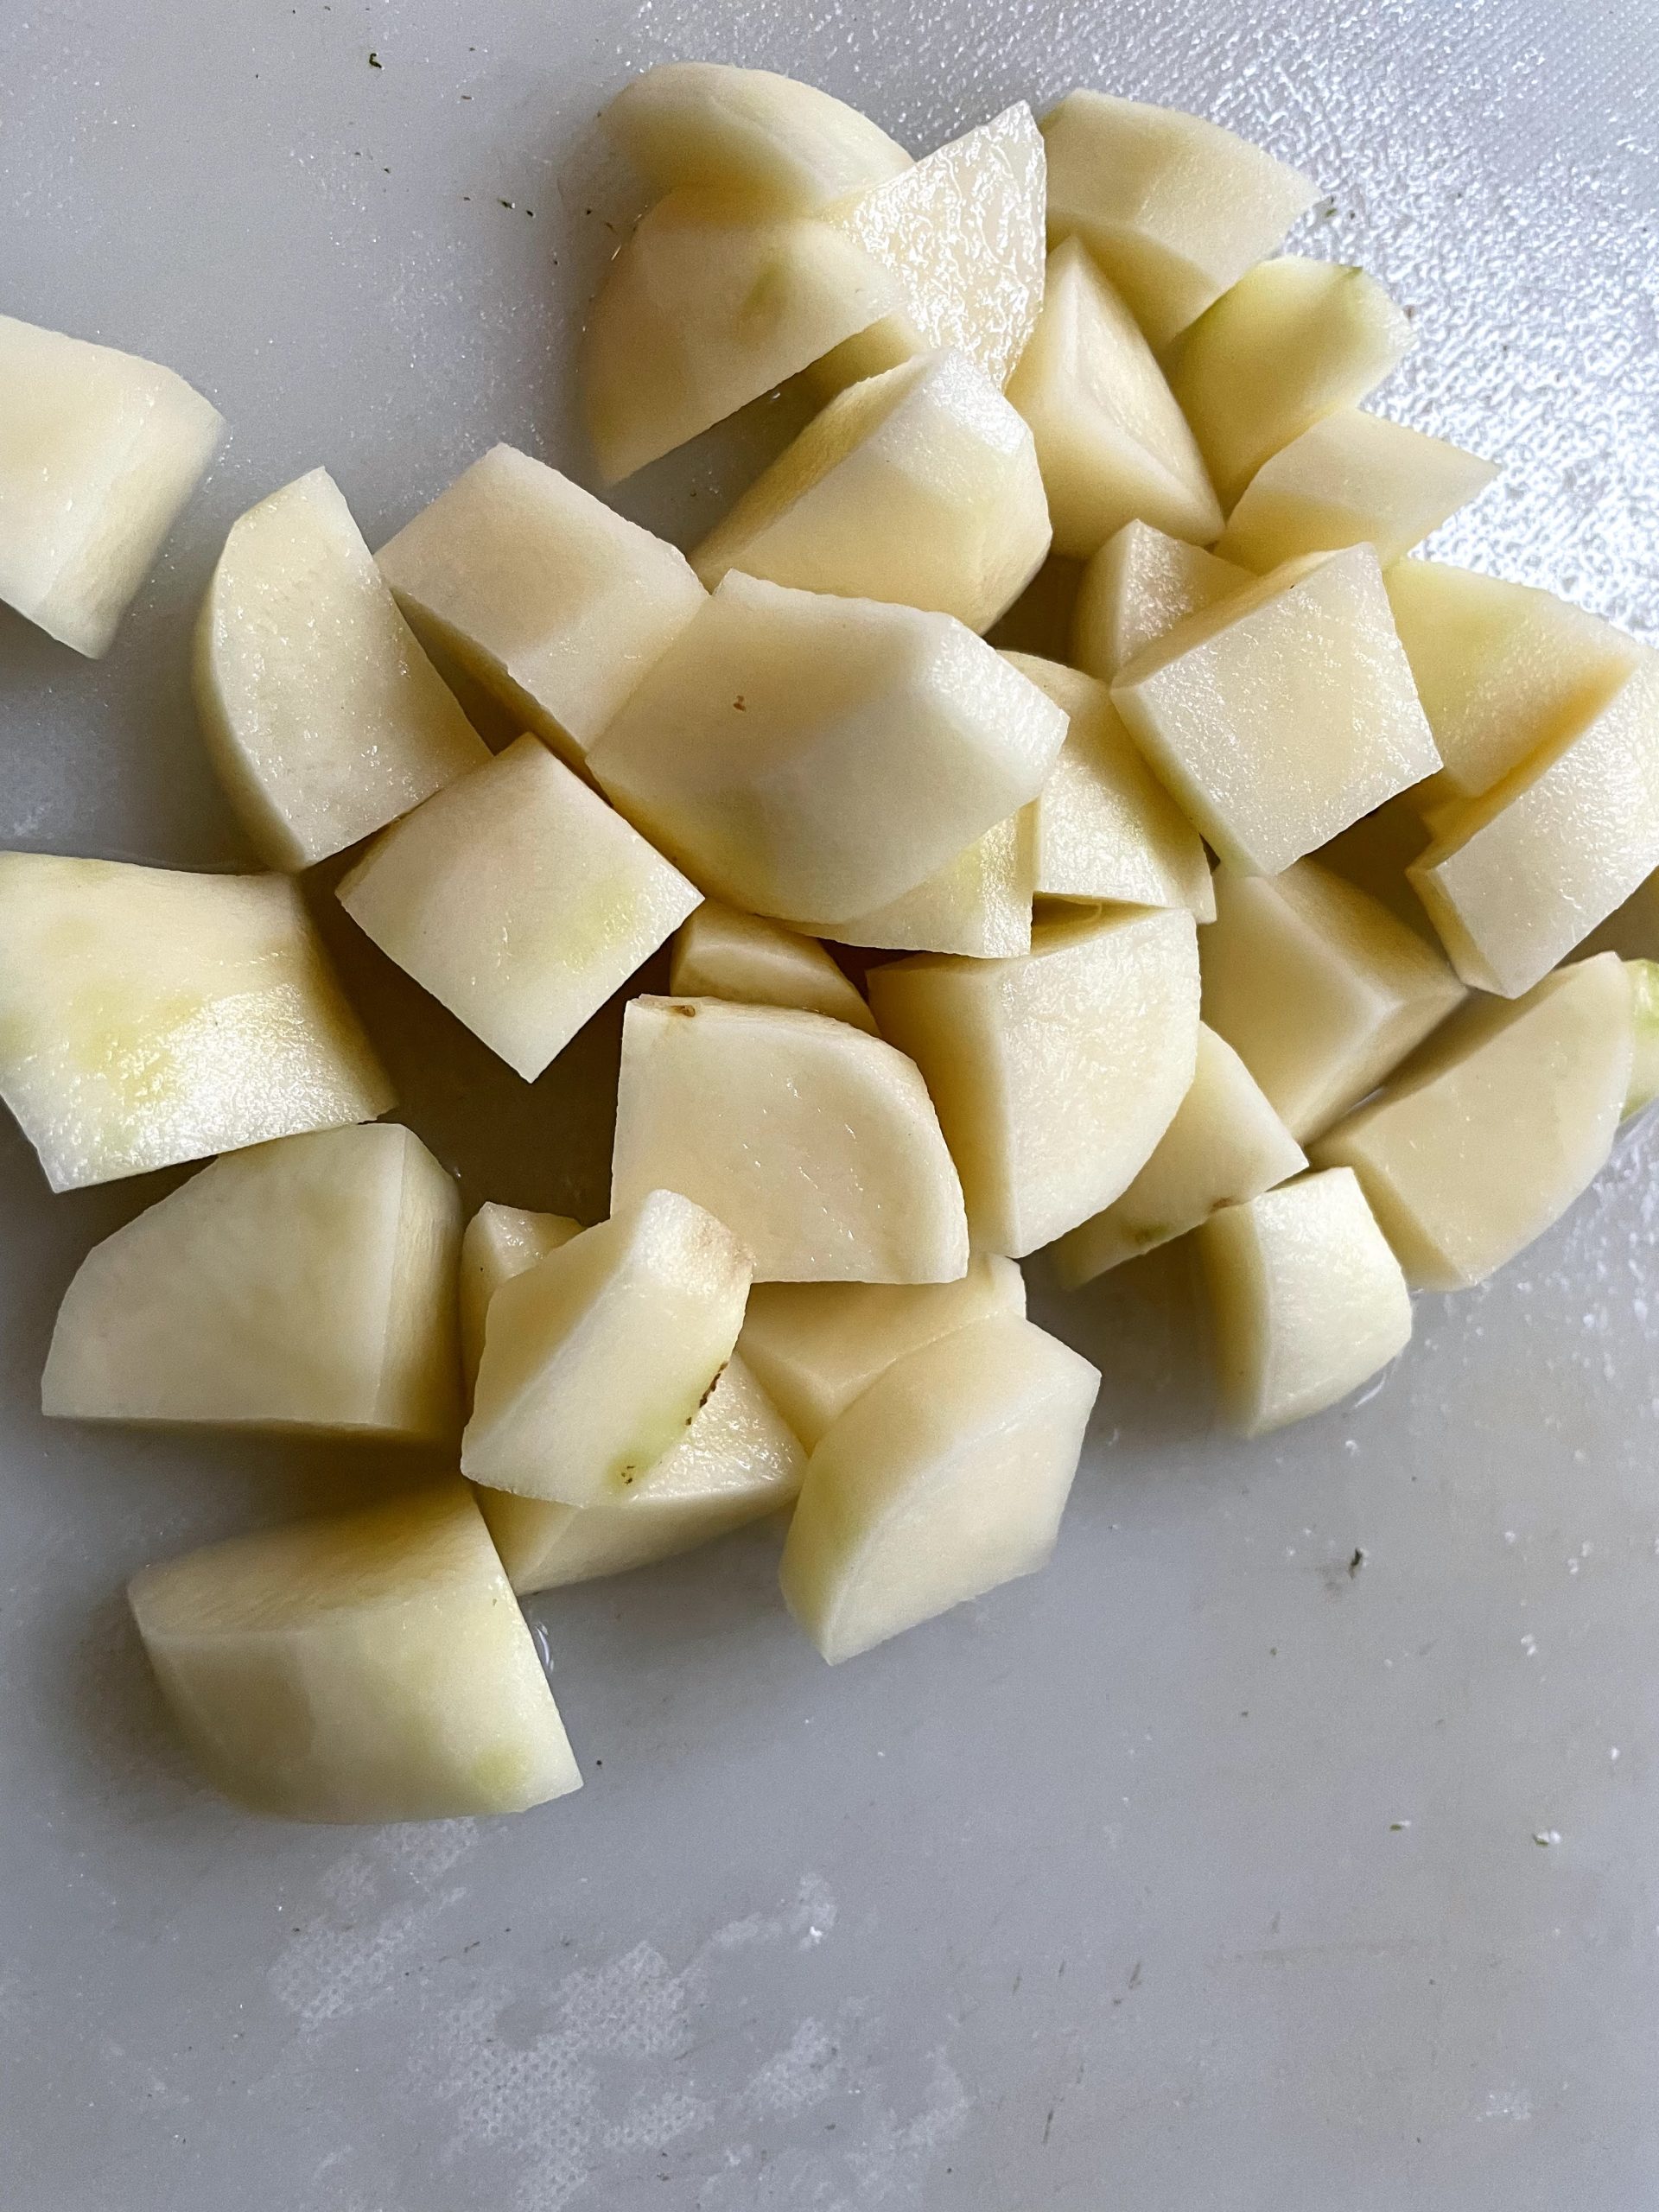 Cubed raw potatoes